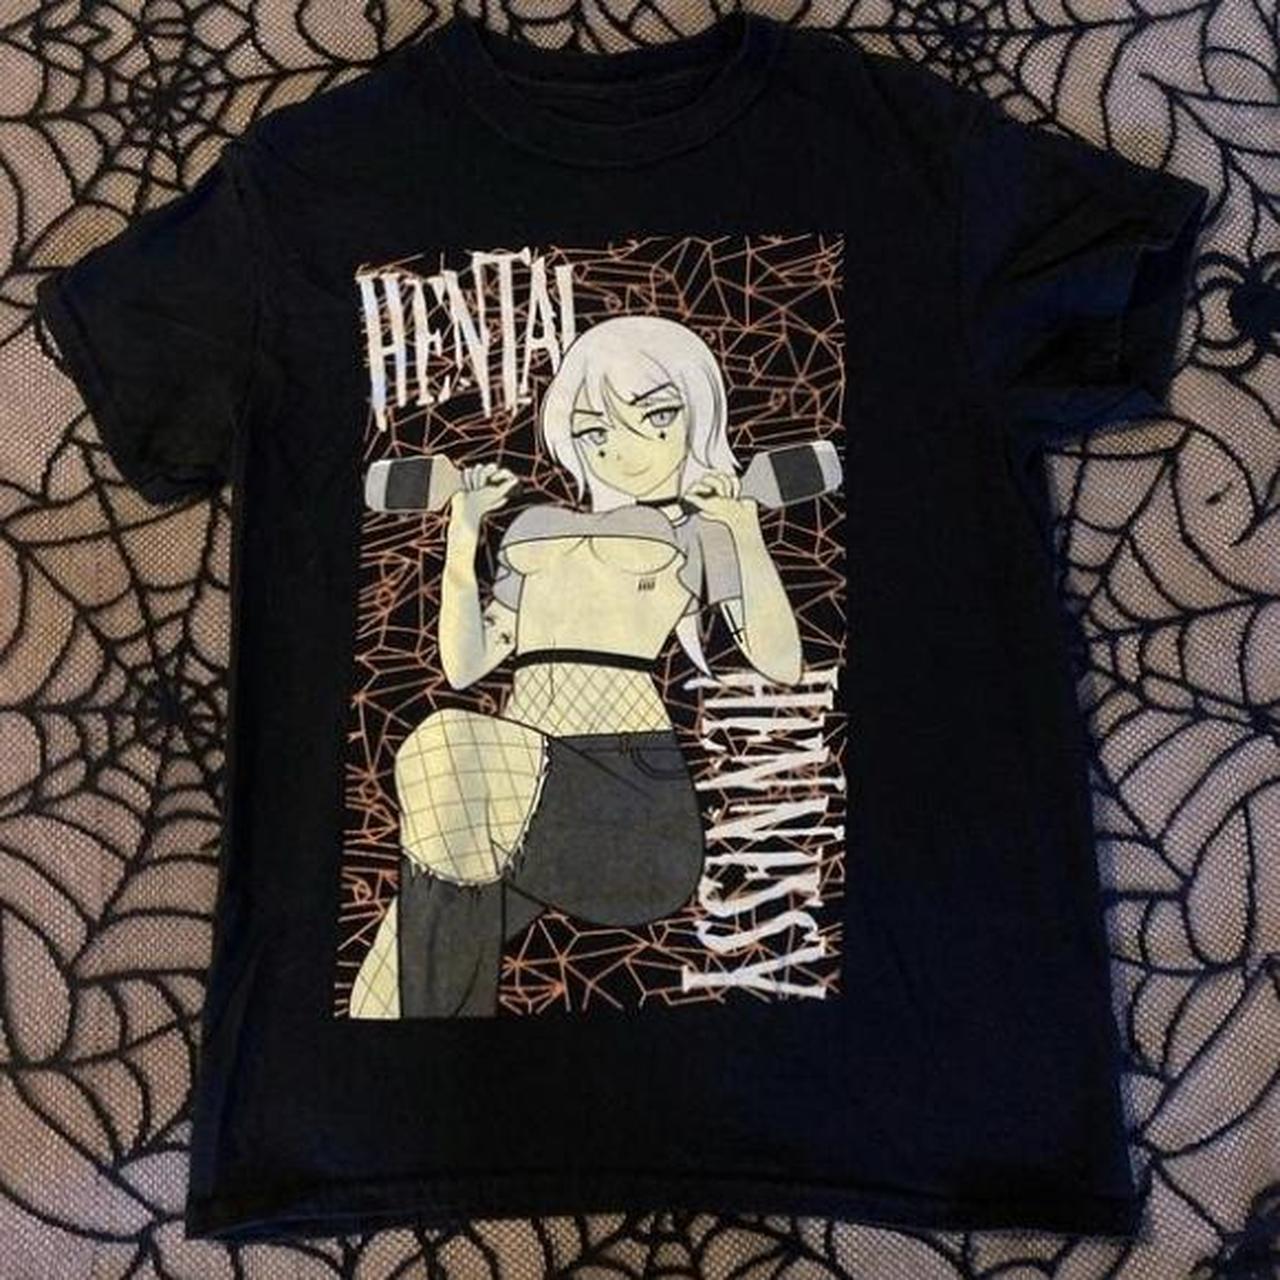 Hot Topic  Shirts  Anime Shirt  Poshmark